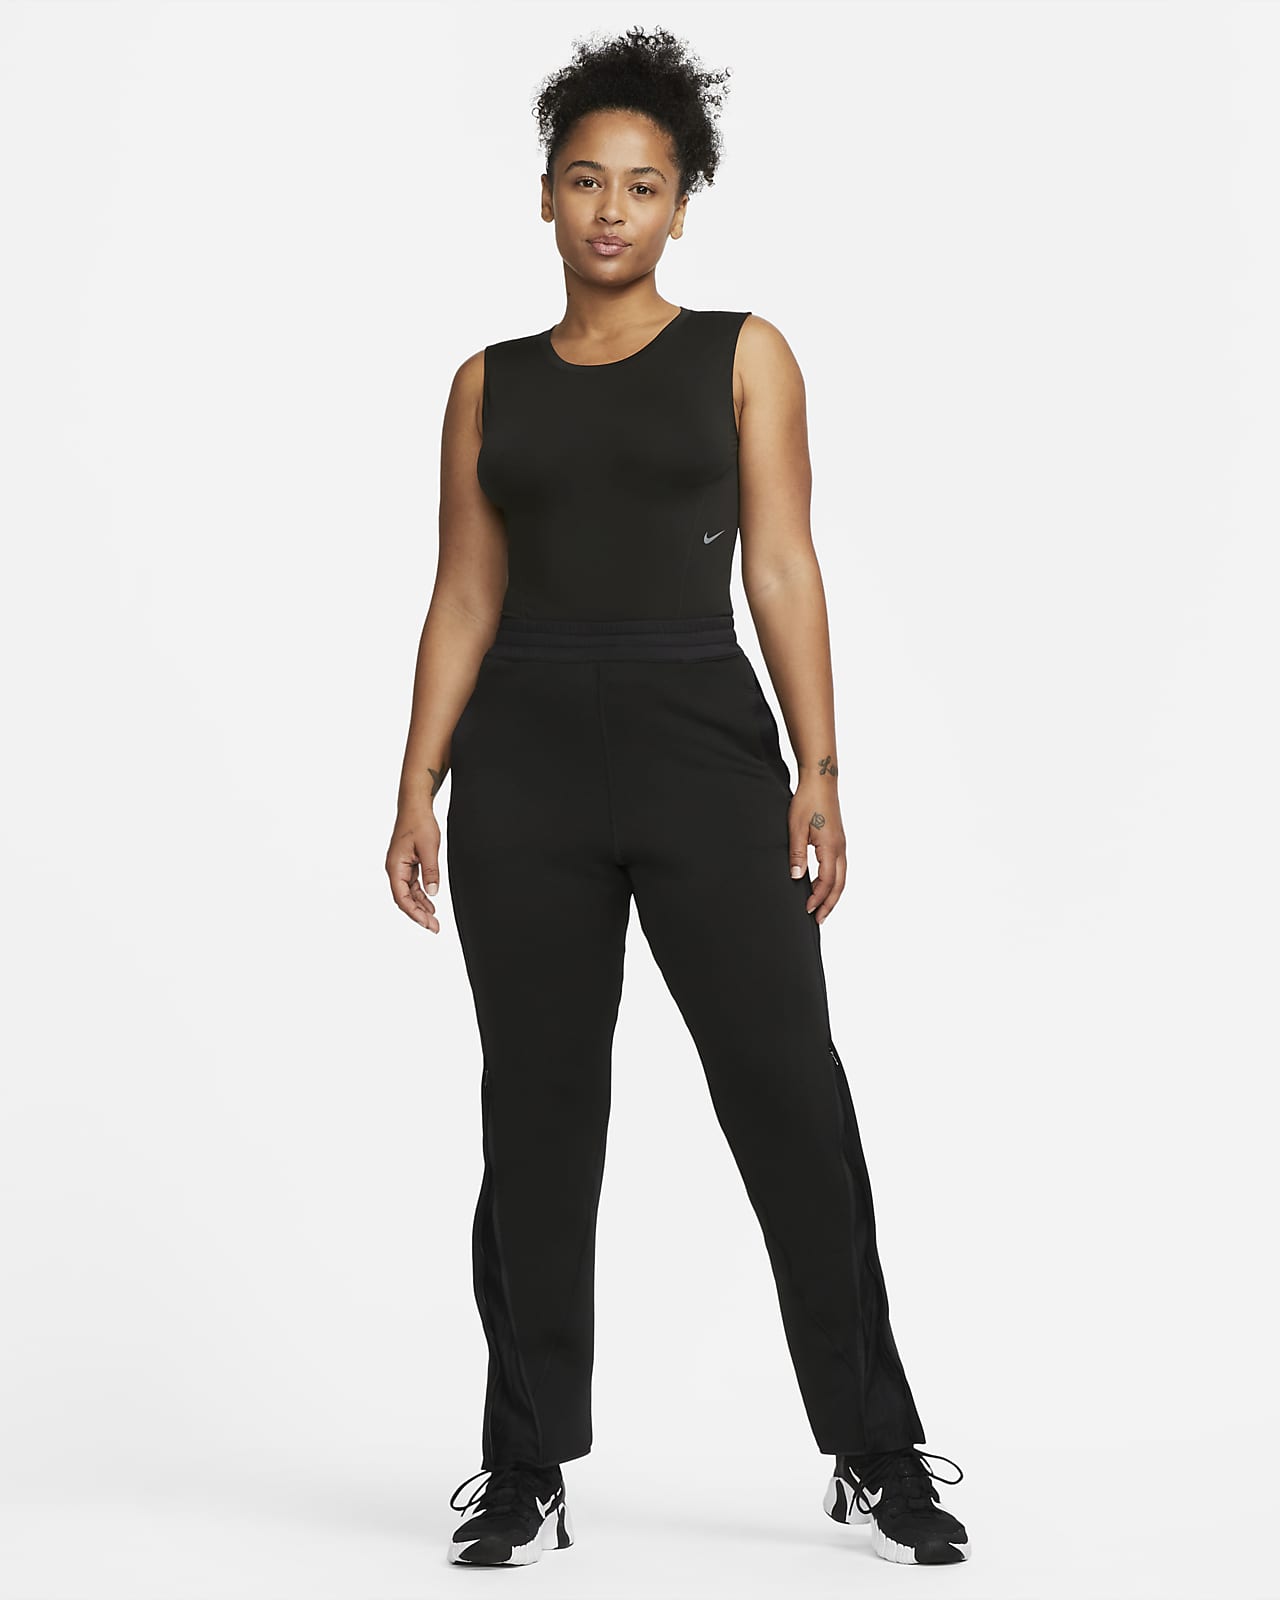 Nike Seamless Studio Women's Training Bodysuit 890648 010 Black